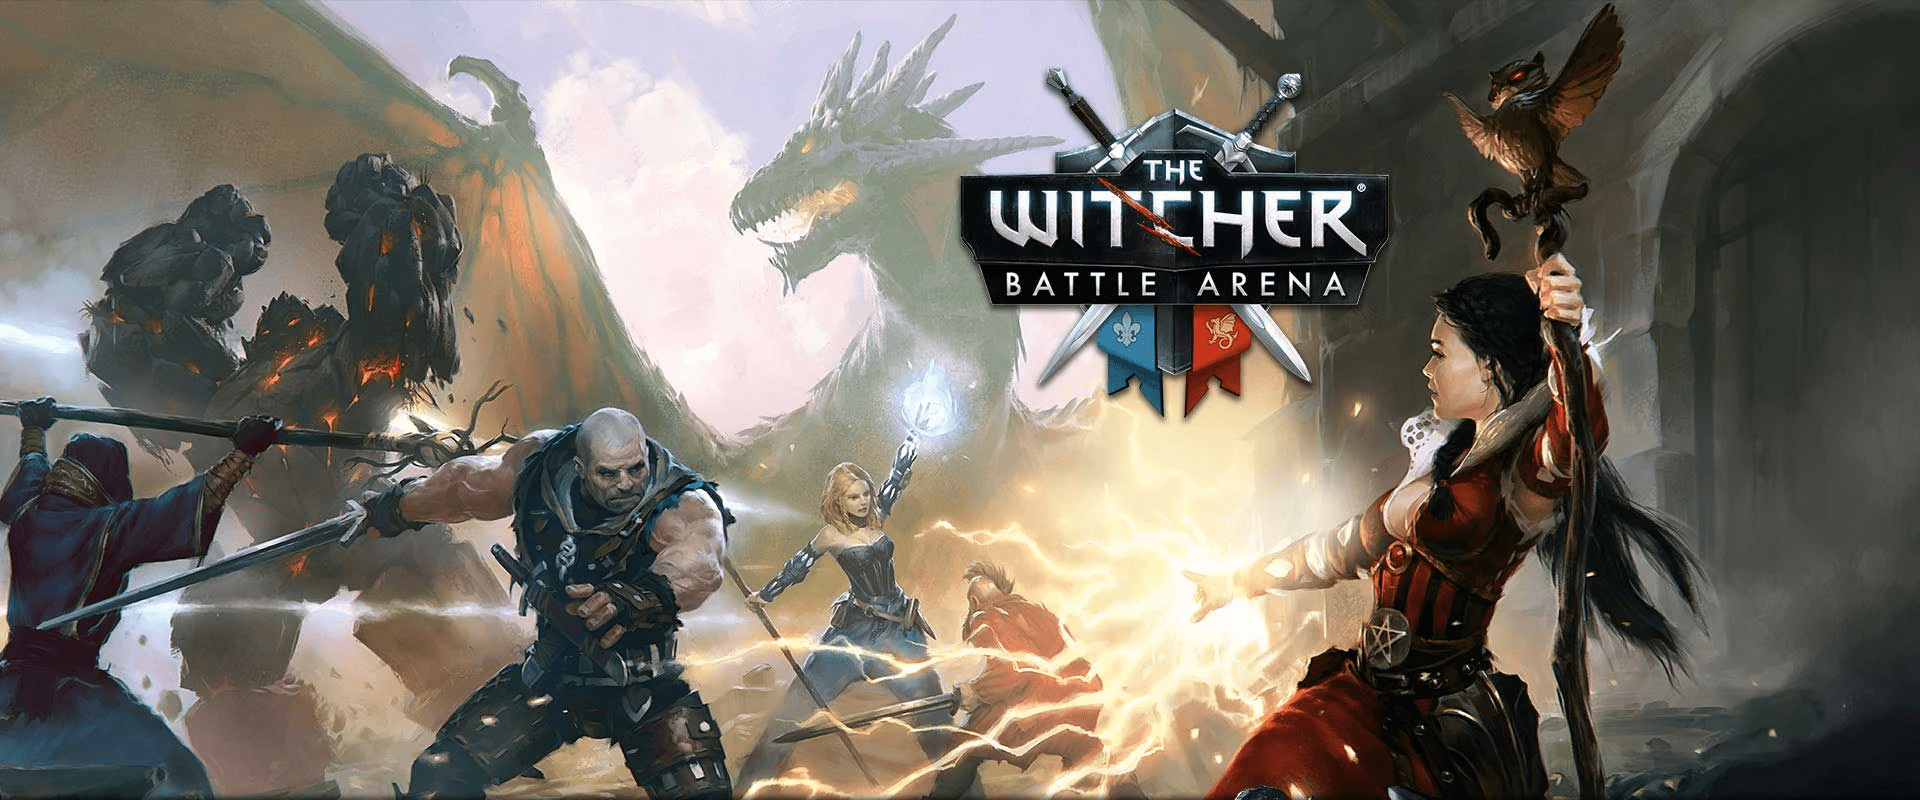 Arena Witcher Battle